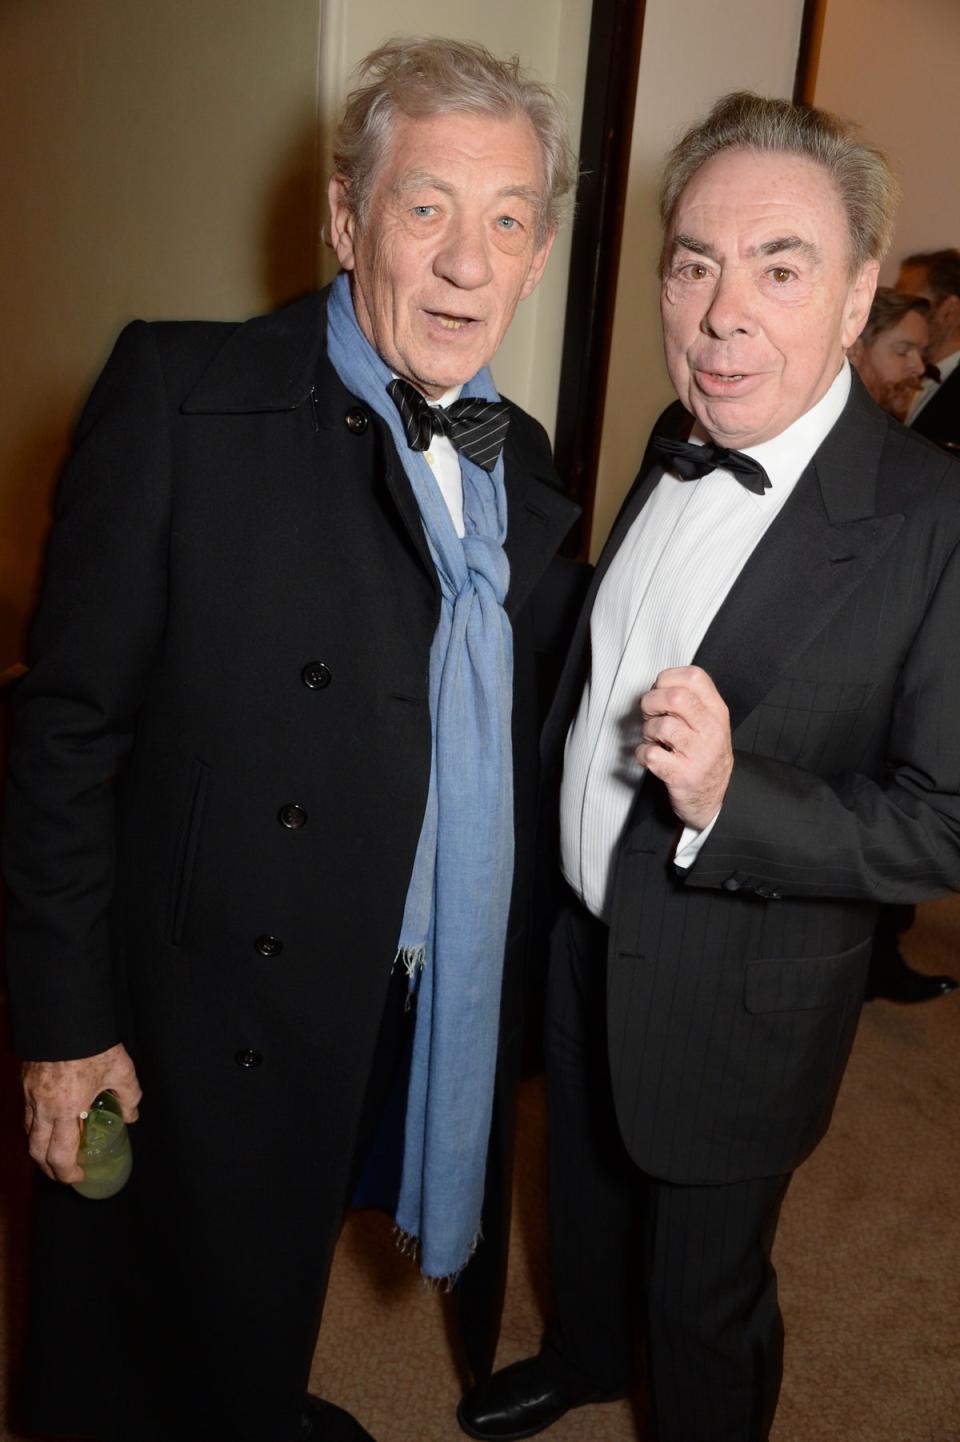 Sir Ian McKellen and Lord Andrew Lloyd Webber attend The 64th Evening Standard Theatre Awards (Dave Benett)